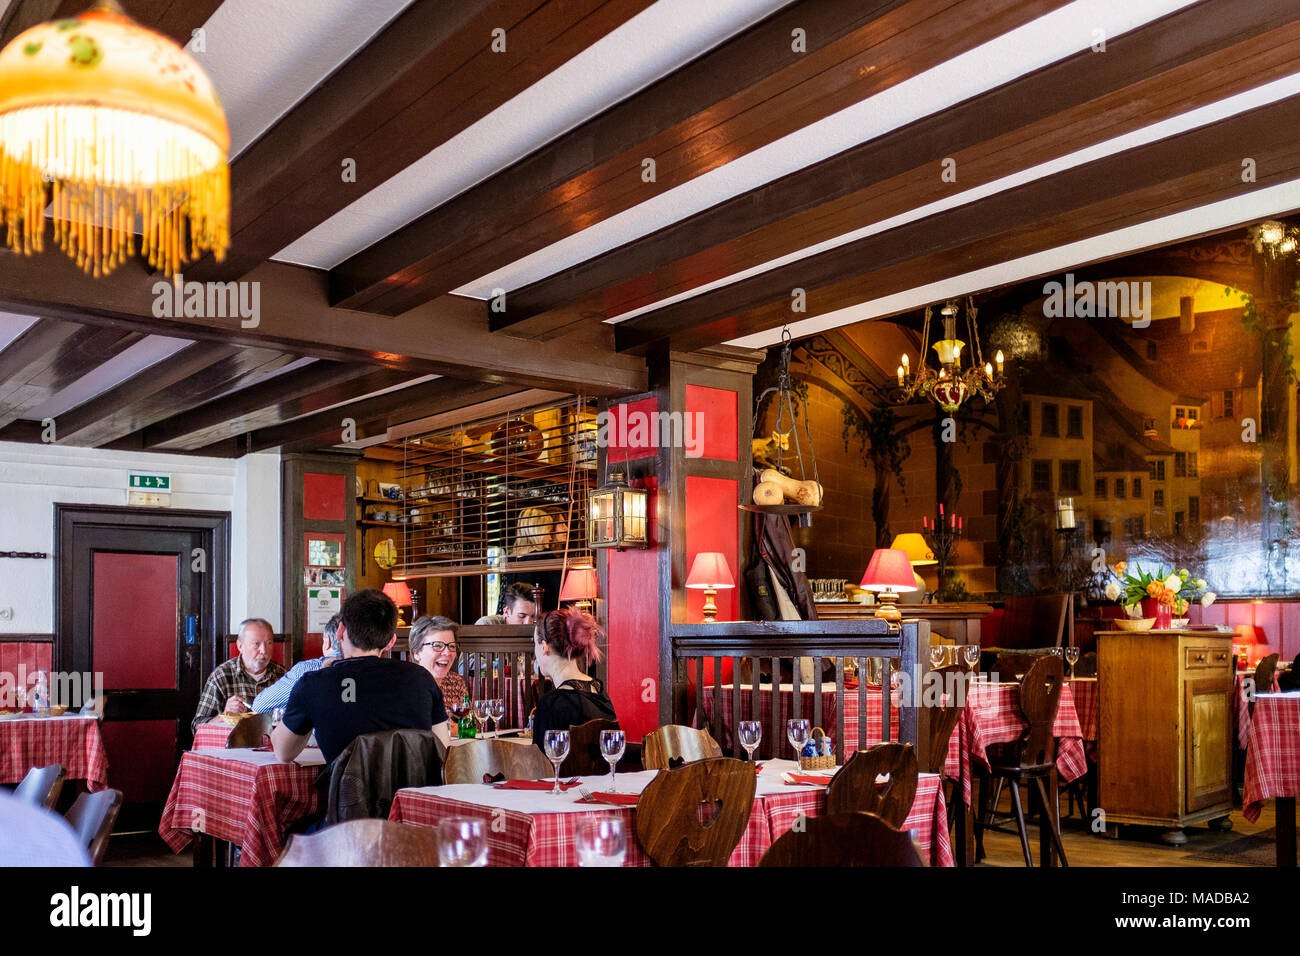 Renard Prêchant restaurant interior, customers lunching, Strasbourg, Alsace, France, Europe, Stock Photo